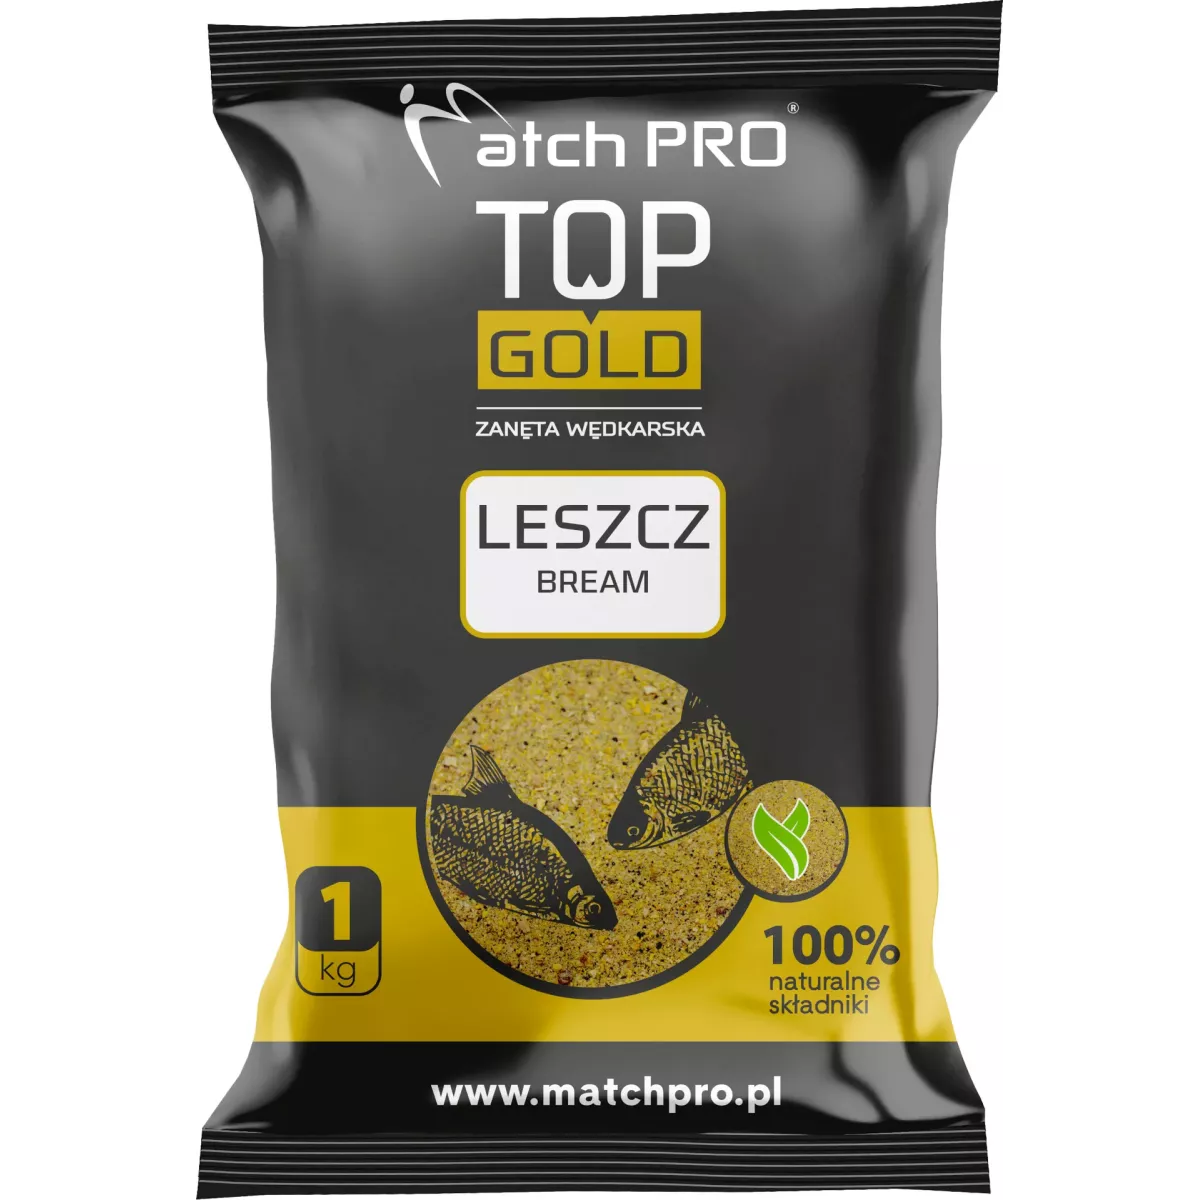 Zanęta MatchPro Top Gold 1kg - LESZCZ